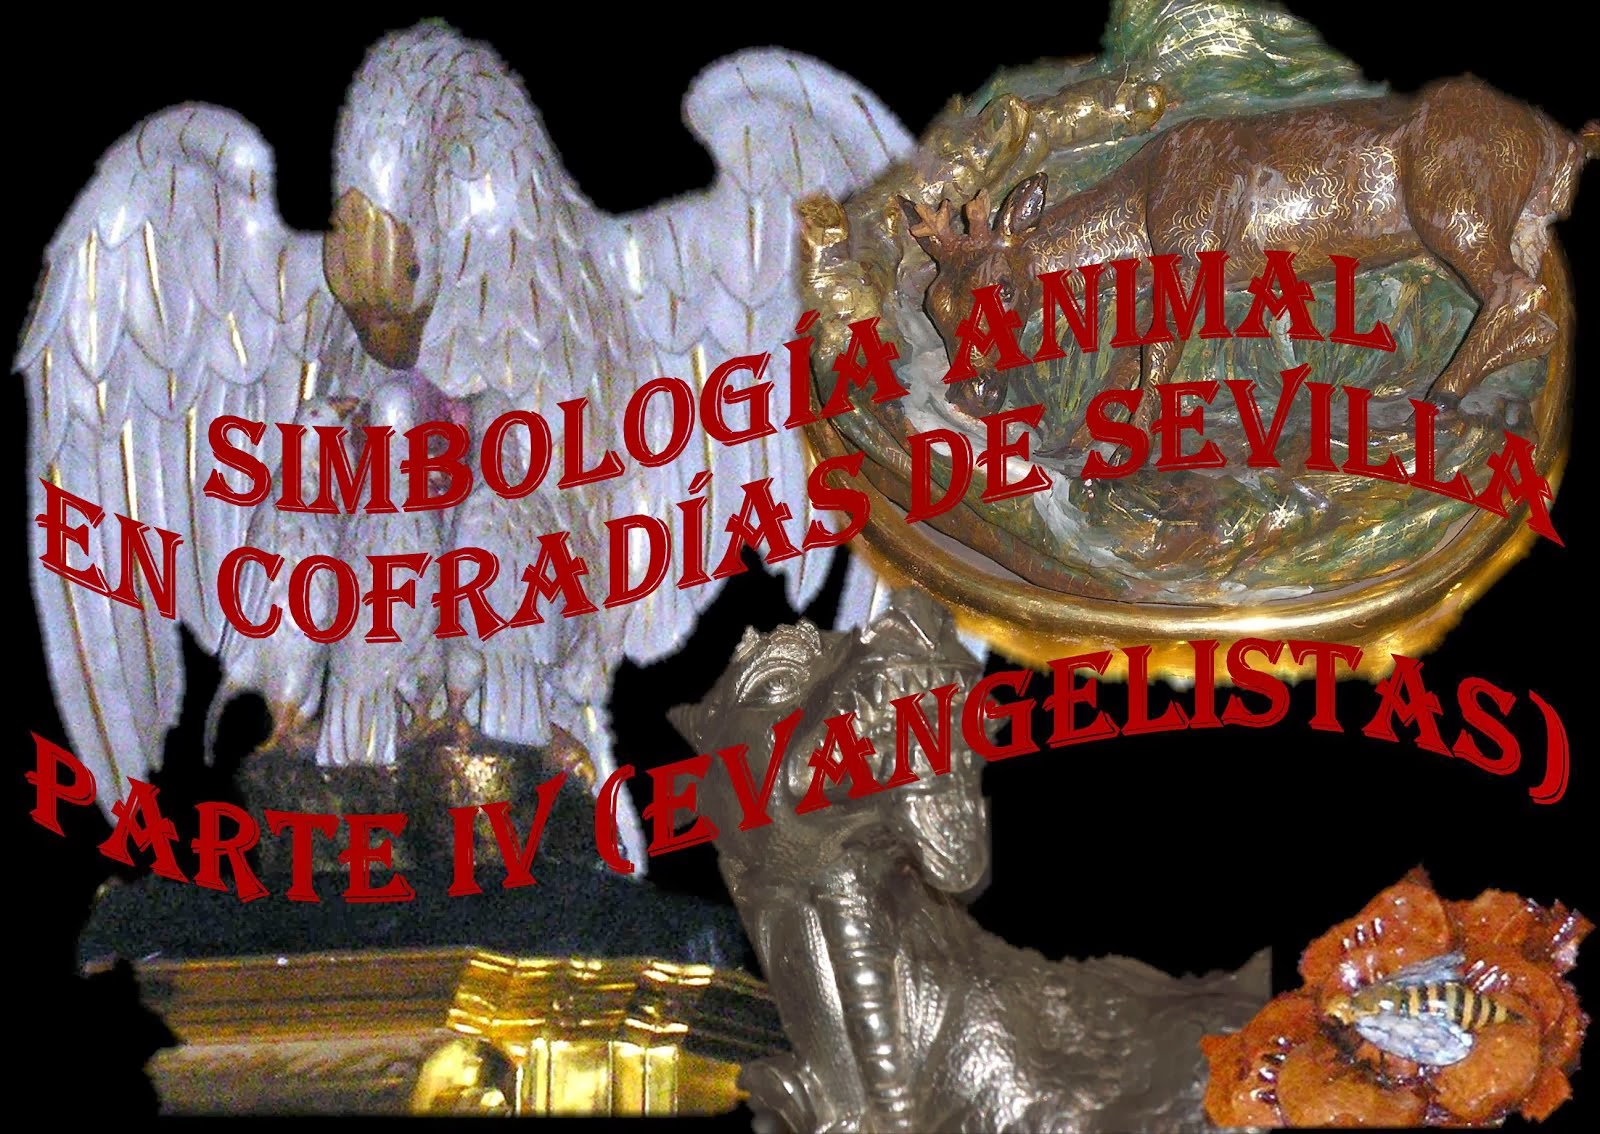 SIMBOLOGIA ANIMAL EN COFRADIAS DE SEVILLA. PARTE IV. EVANGELISTAS